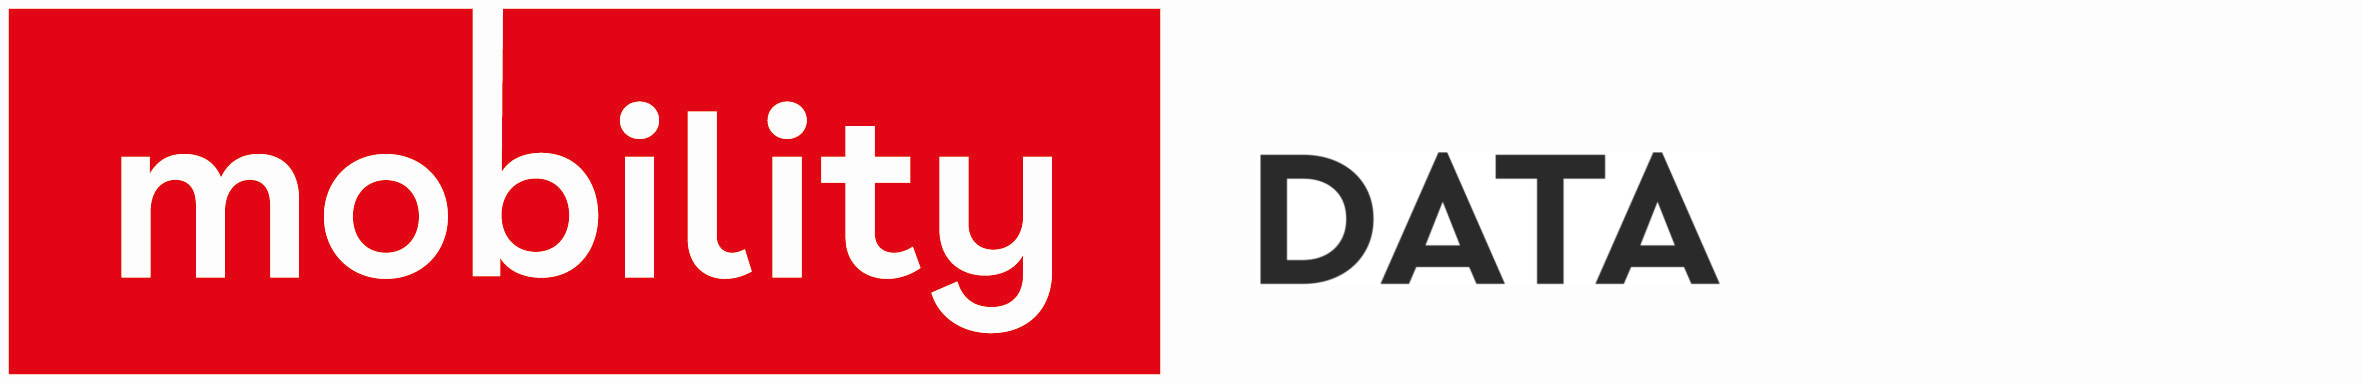 mobility DATA Logo